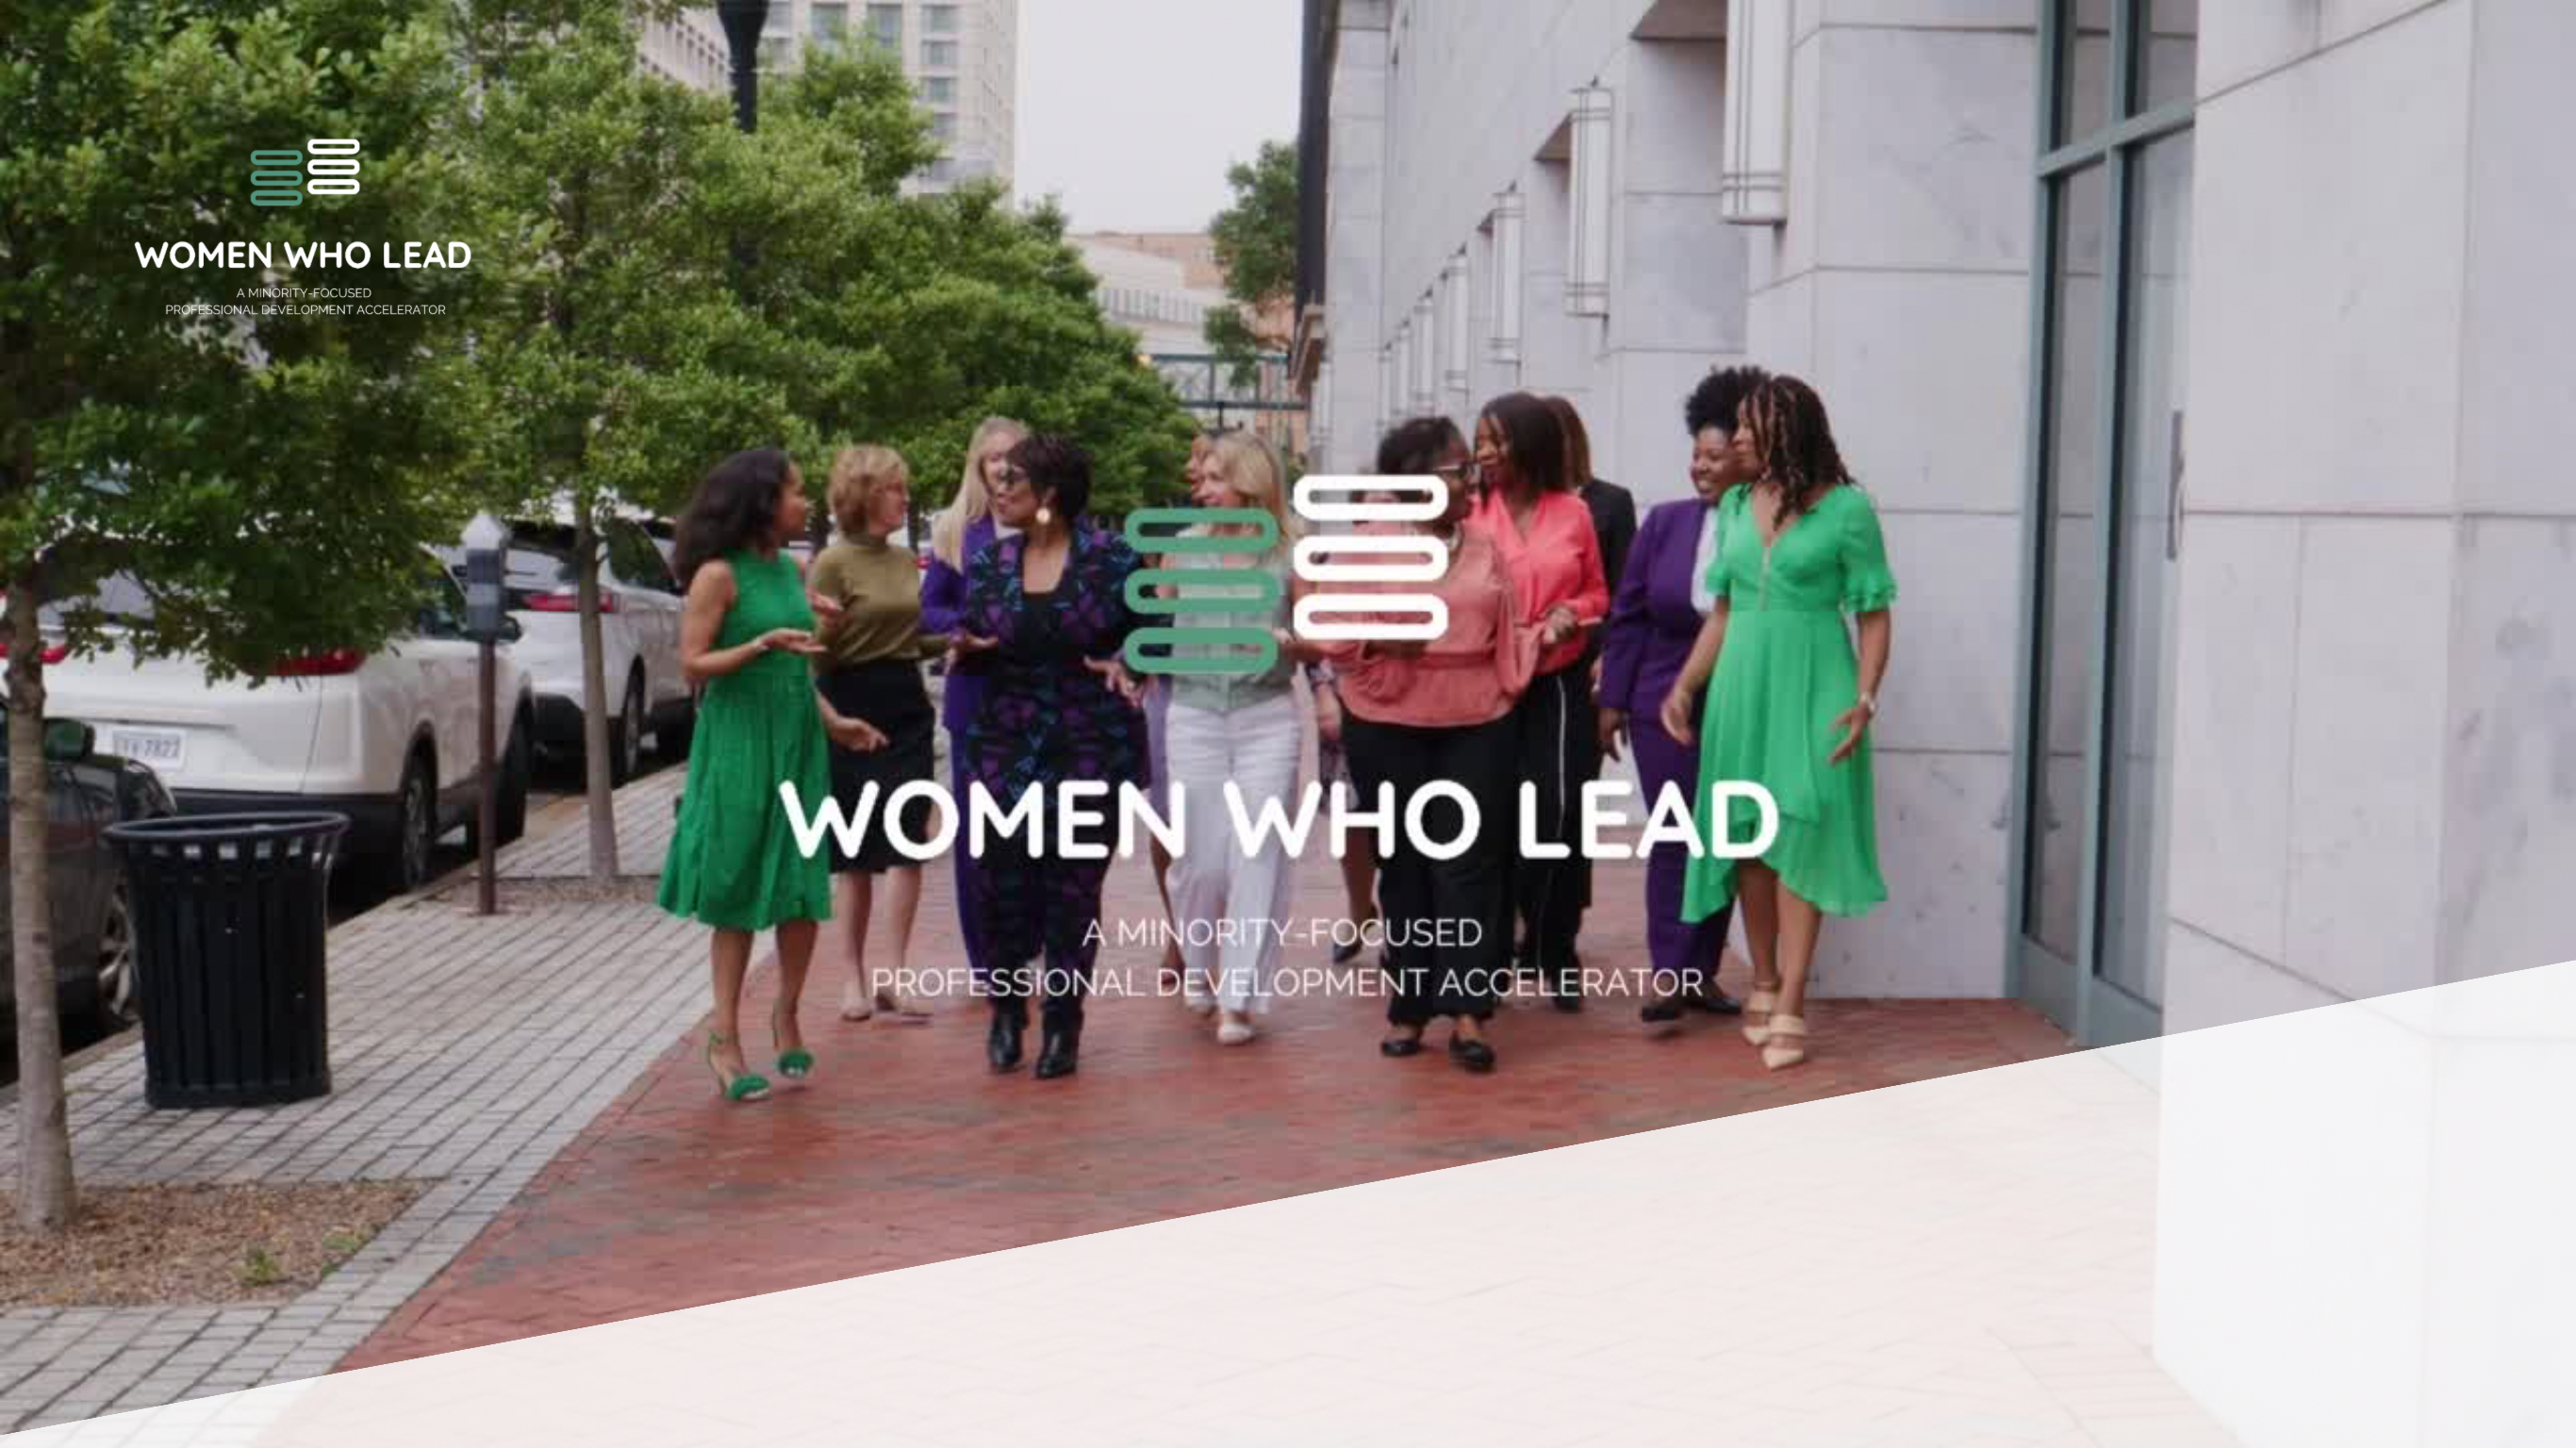 Women Who Lead, a Minority-Focused Professional Development Accelerator